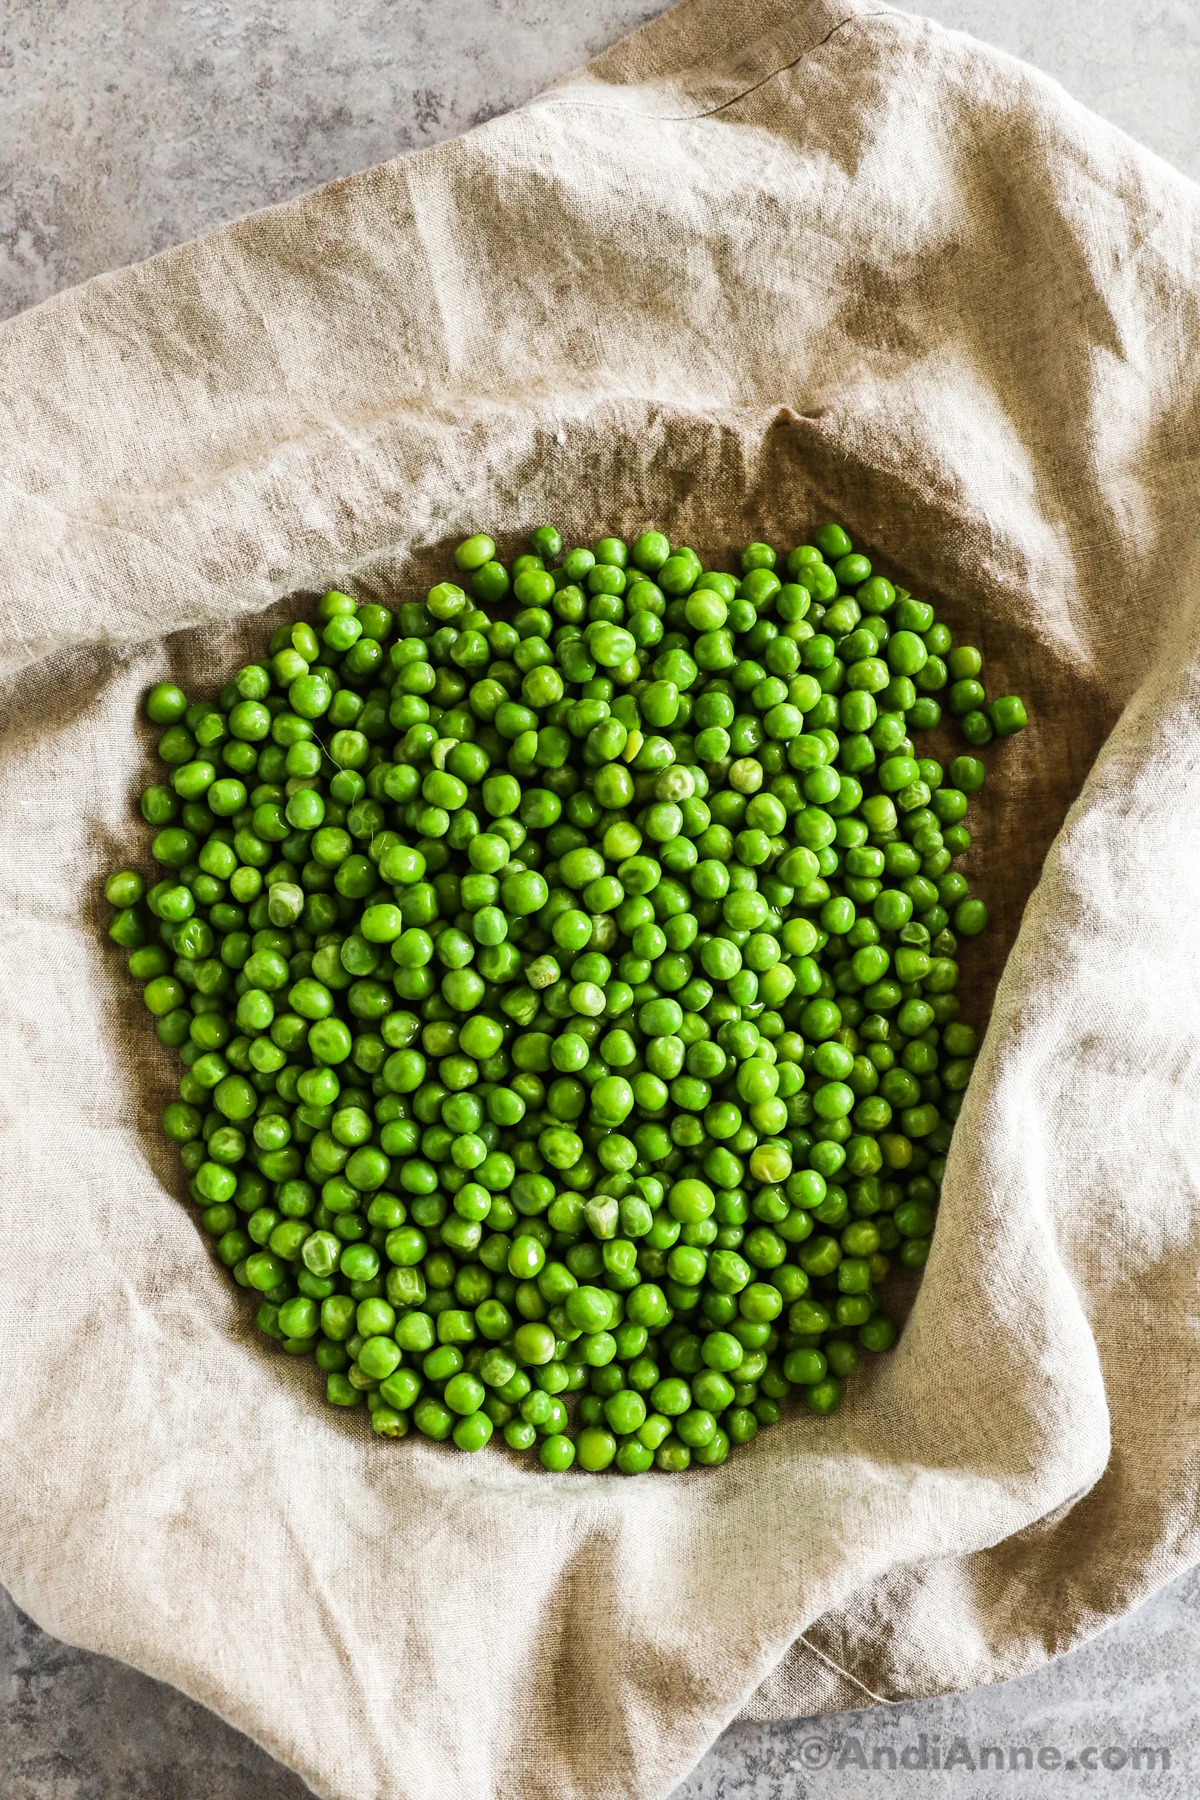 Peas on a kitchen towel.